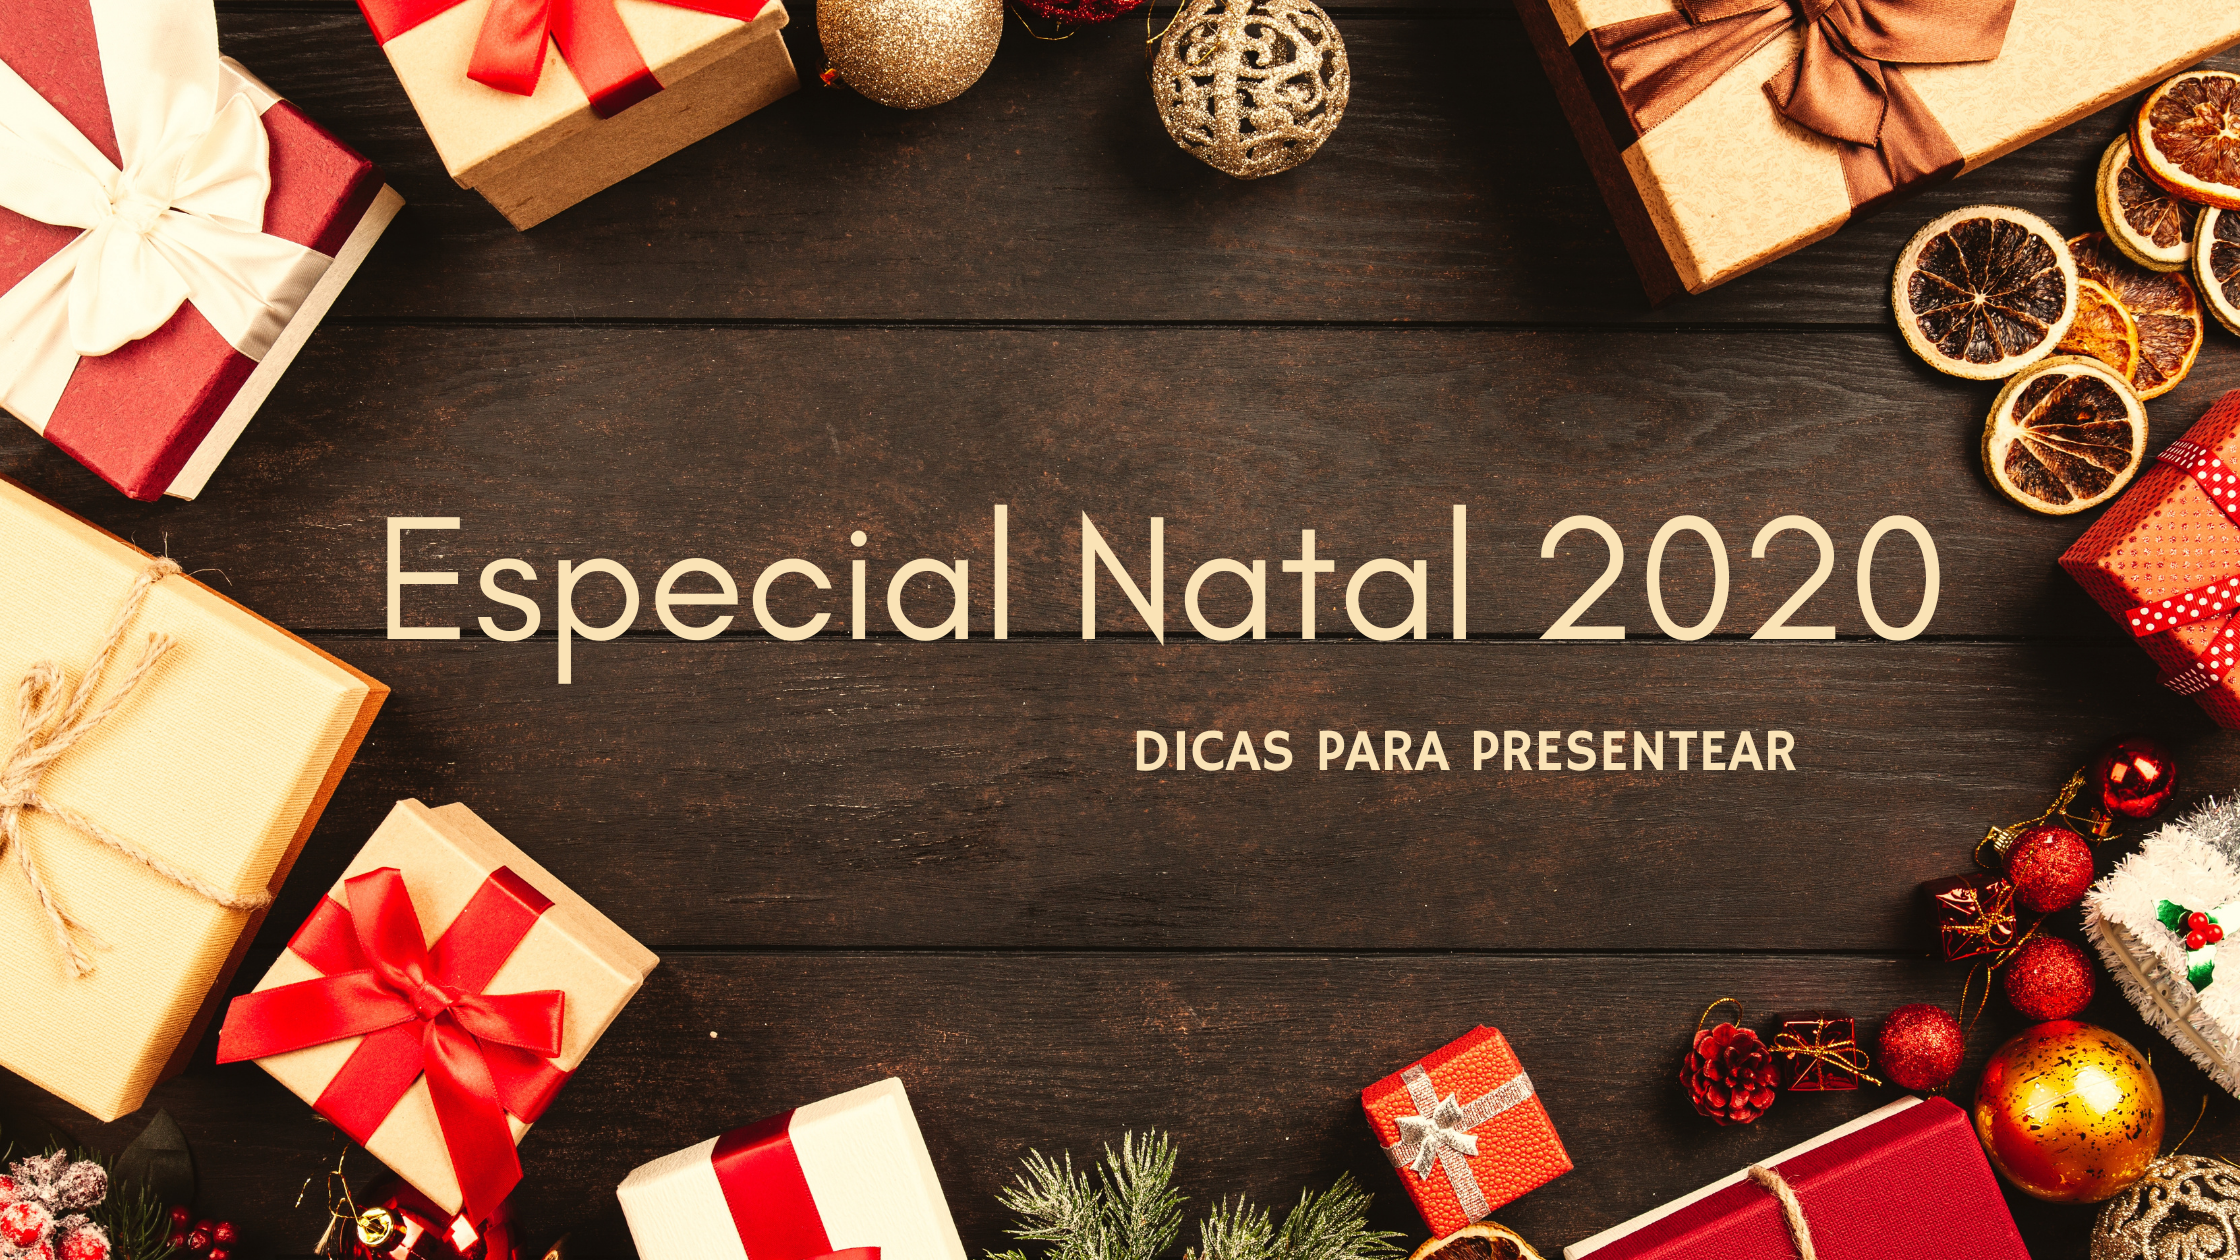 Especial Natal 2020: Dicas para presentar